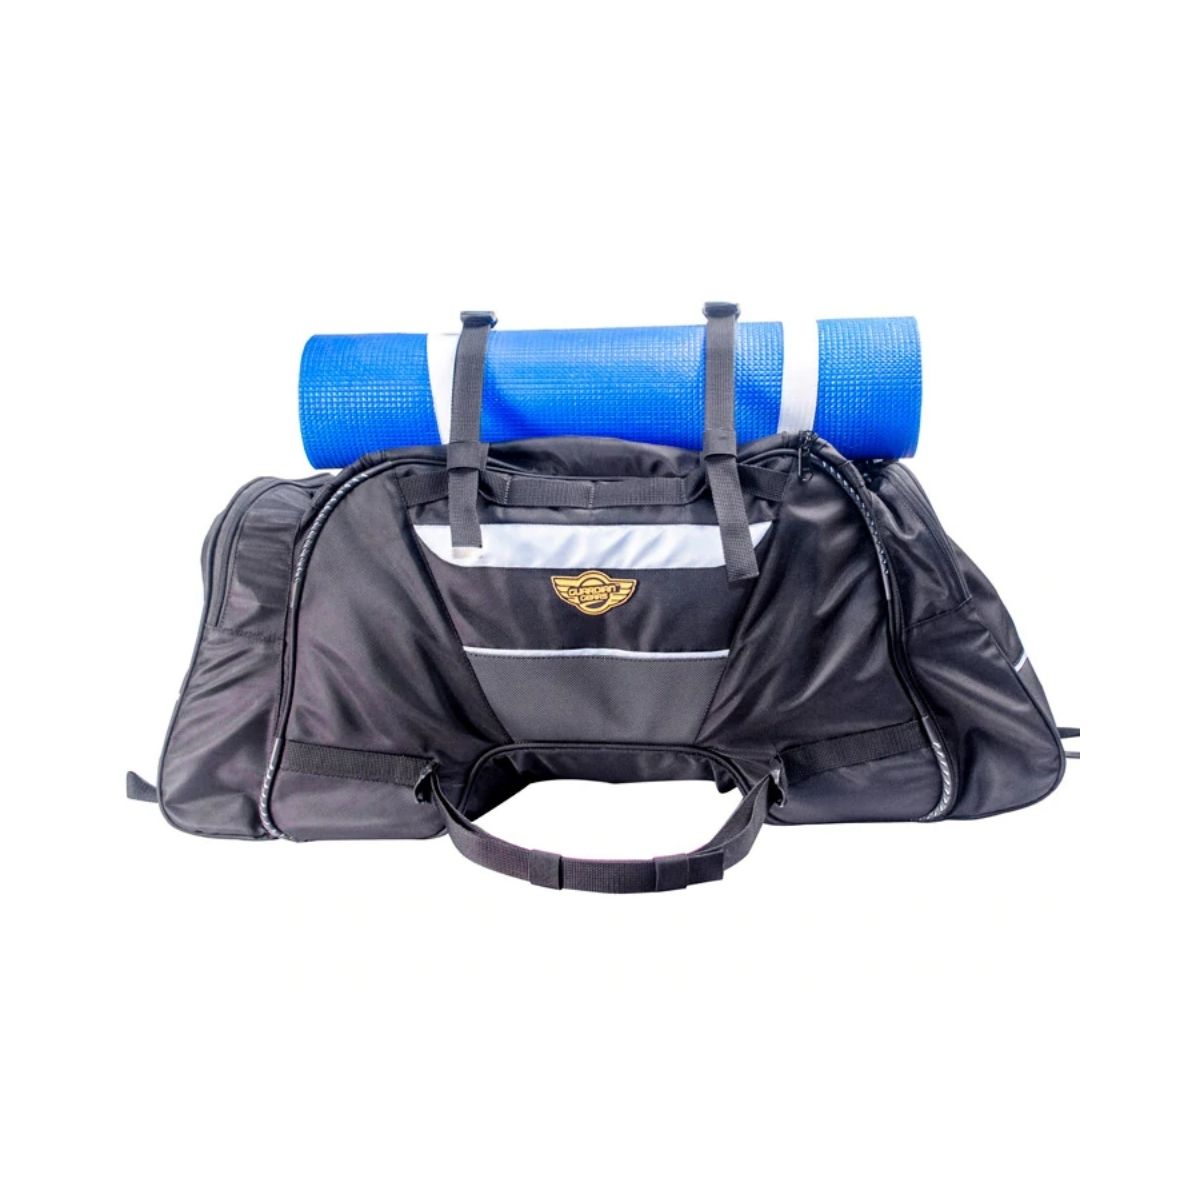 Rhino 70L Tail Bag with Rain Cover - Black - 9